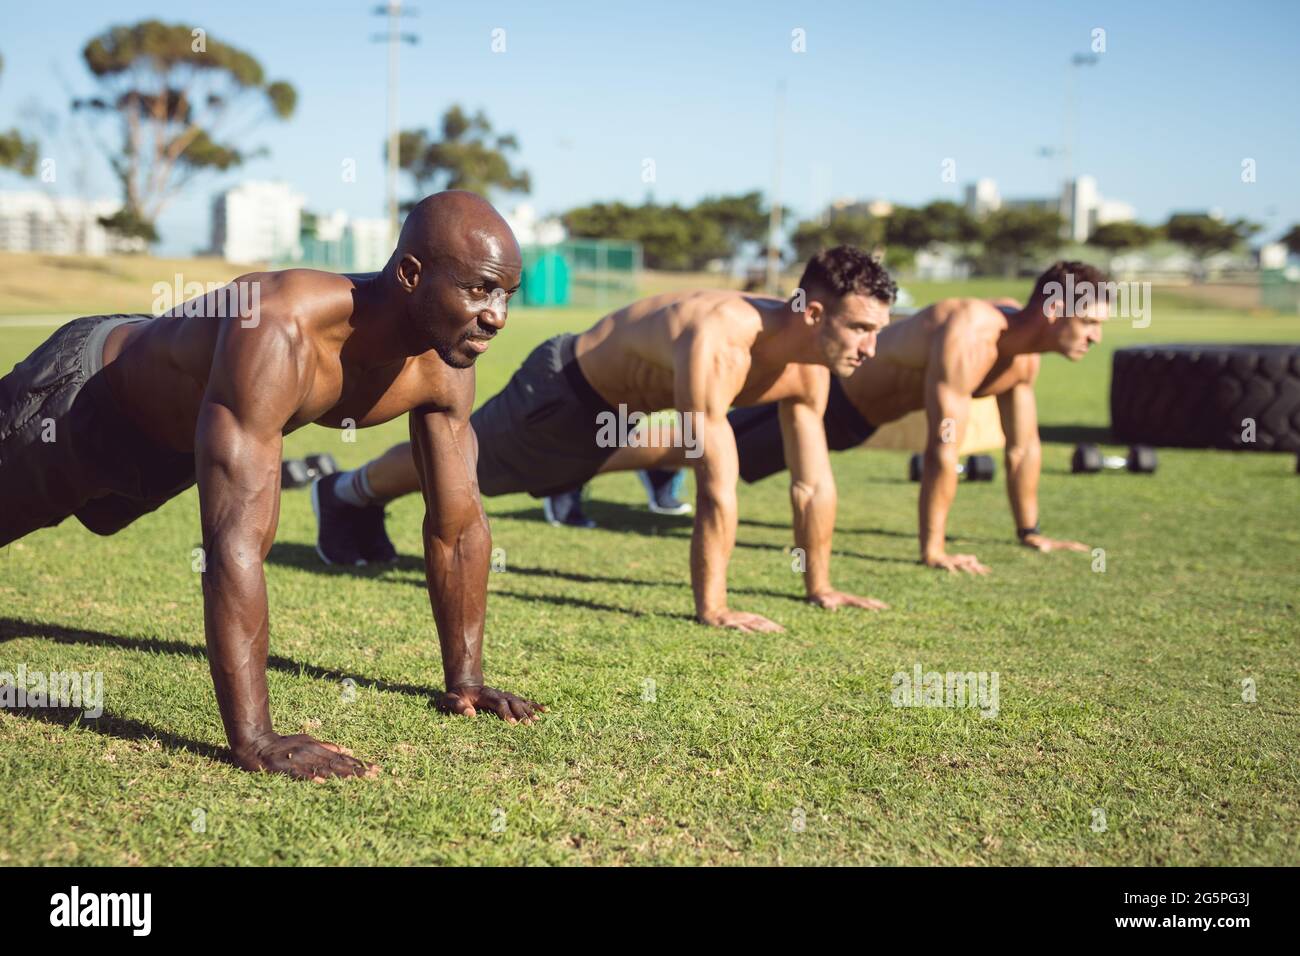 Diverse group of muscular men doing push ups exercising outdoors